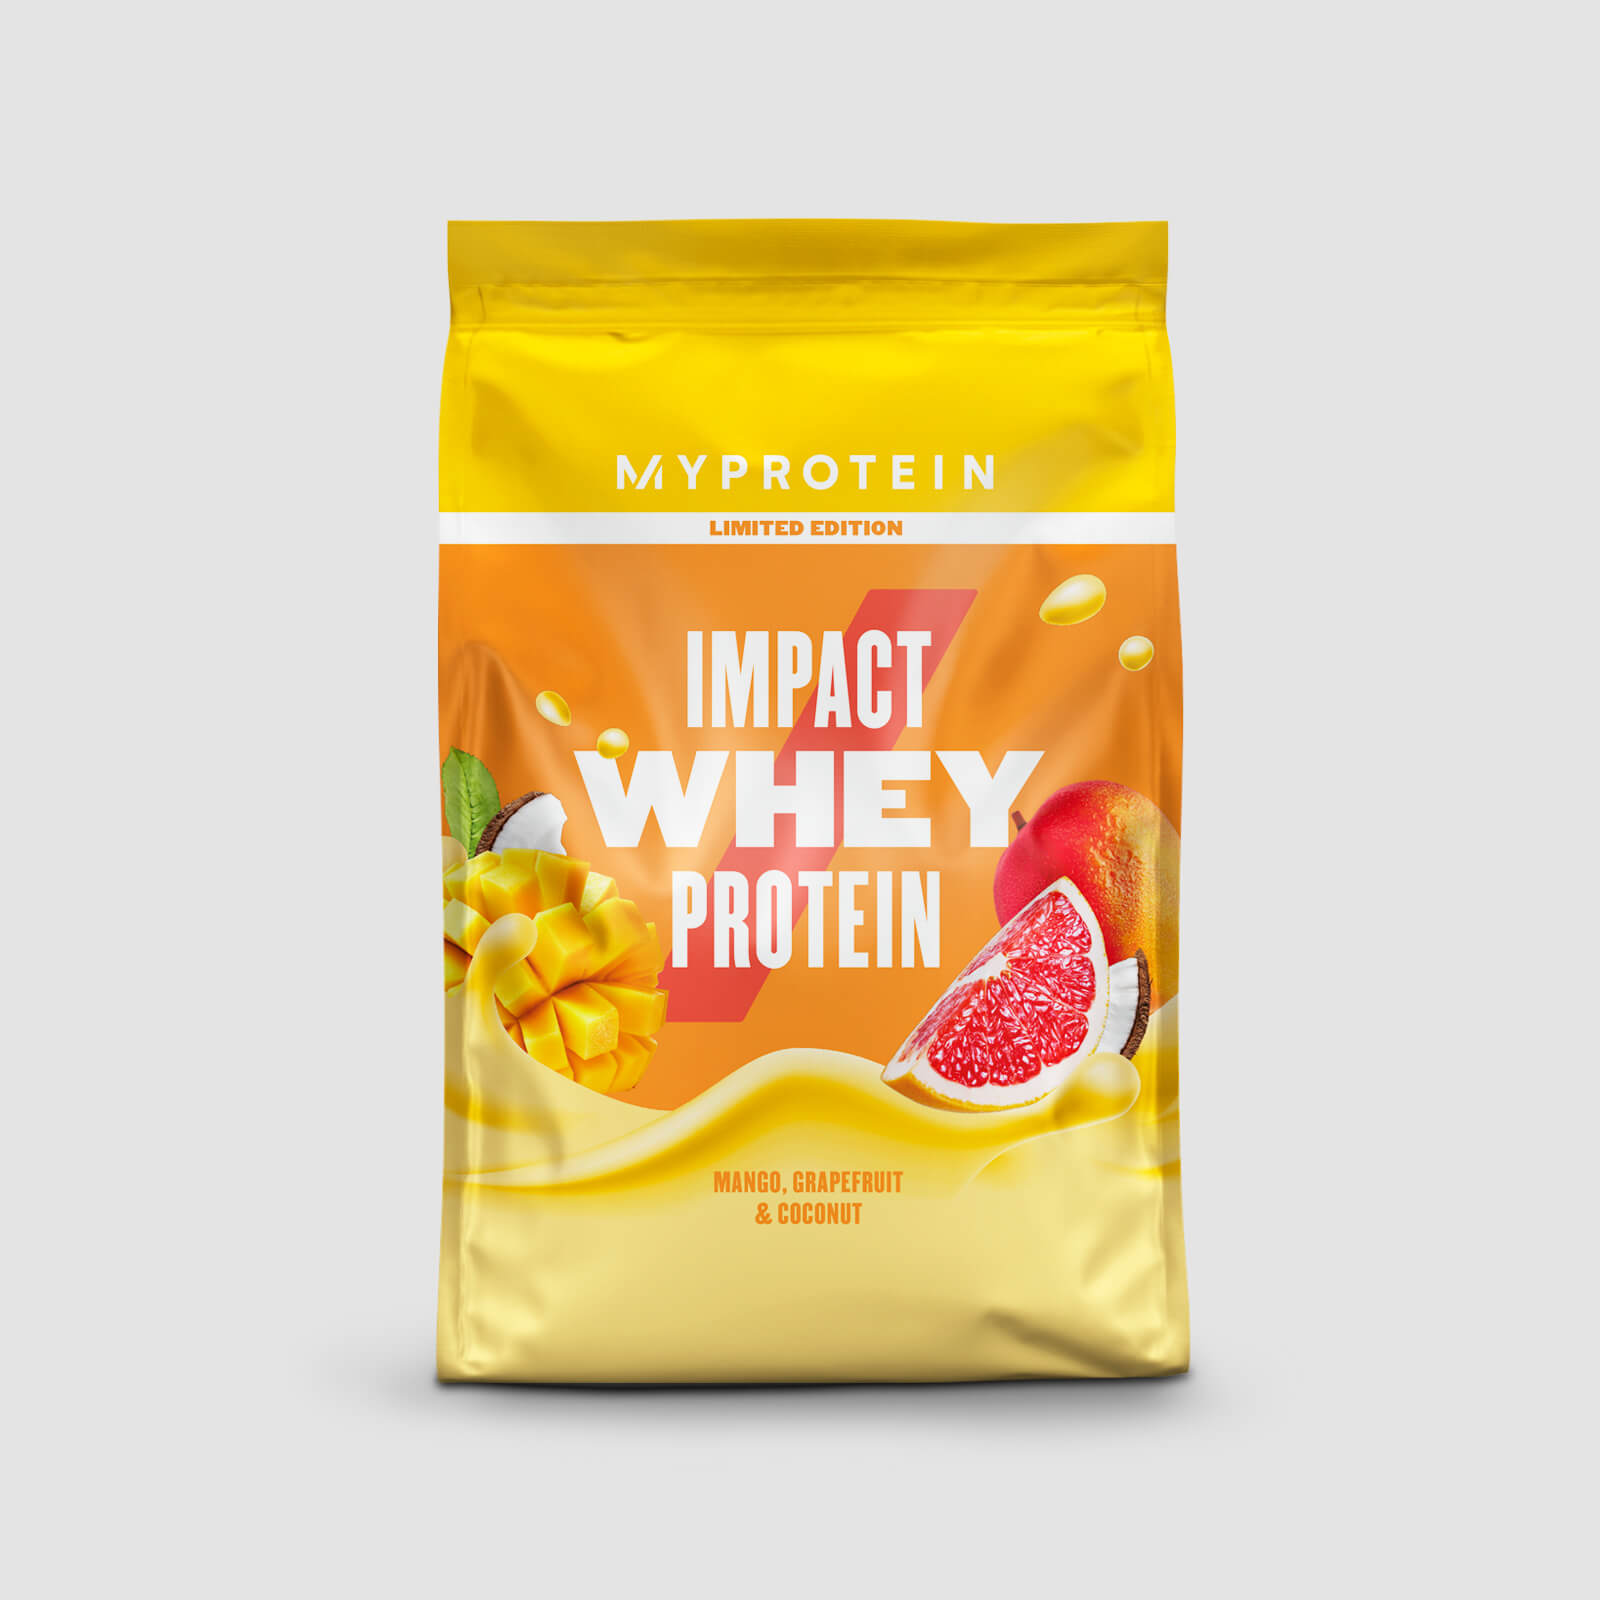 Impact Whey Protein – Mango Grapefruit Coconut flavour